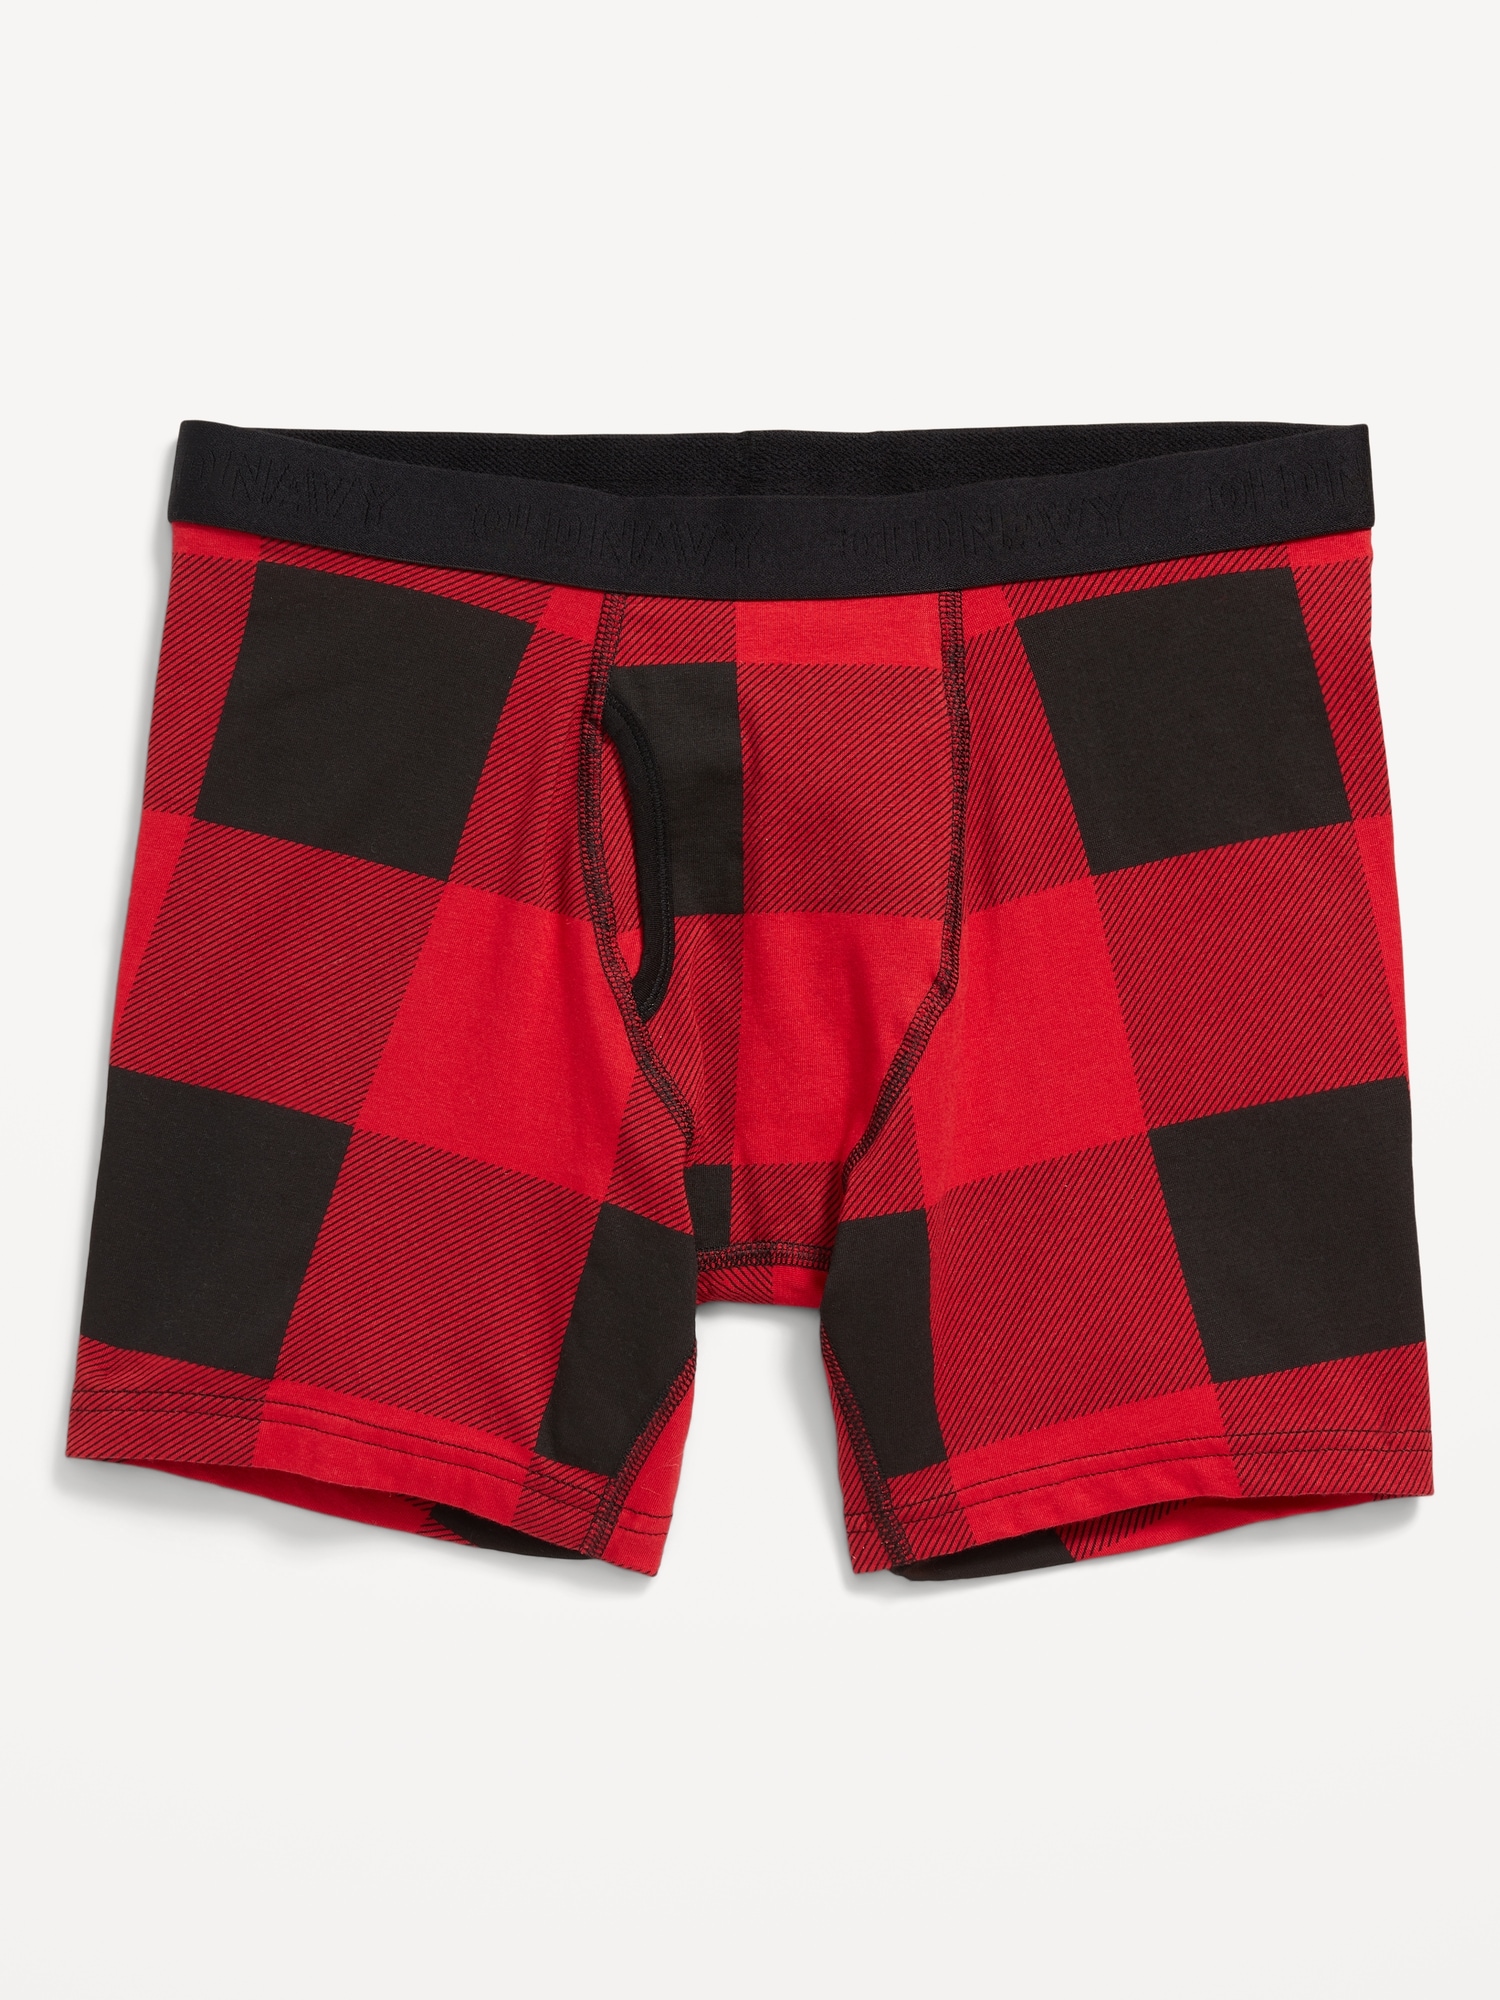 Soft-Washed Built-In Flex Printed Boxer-Brief Underwear for Men